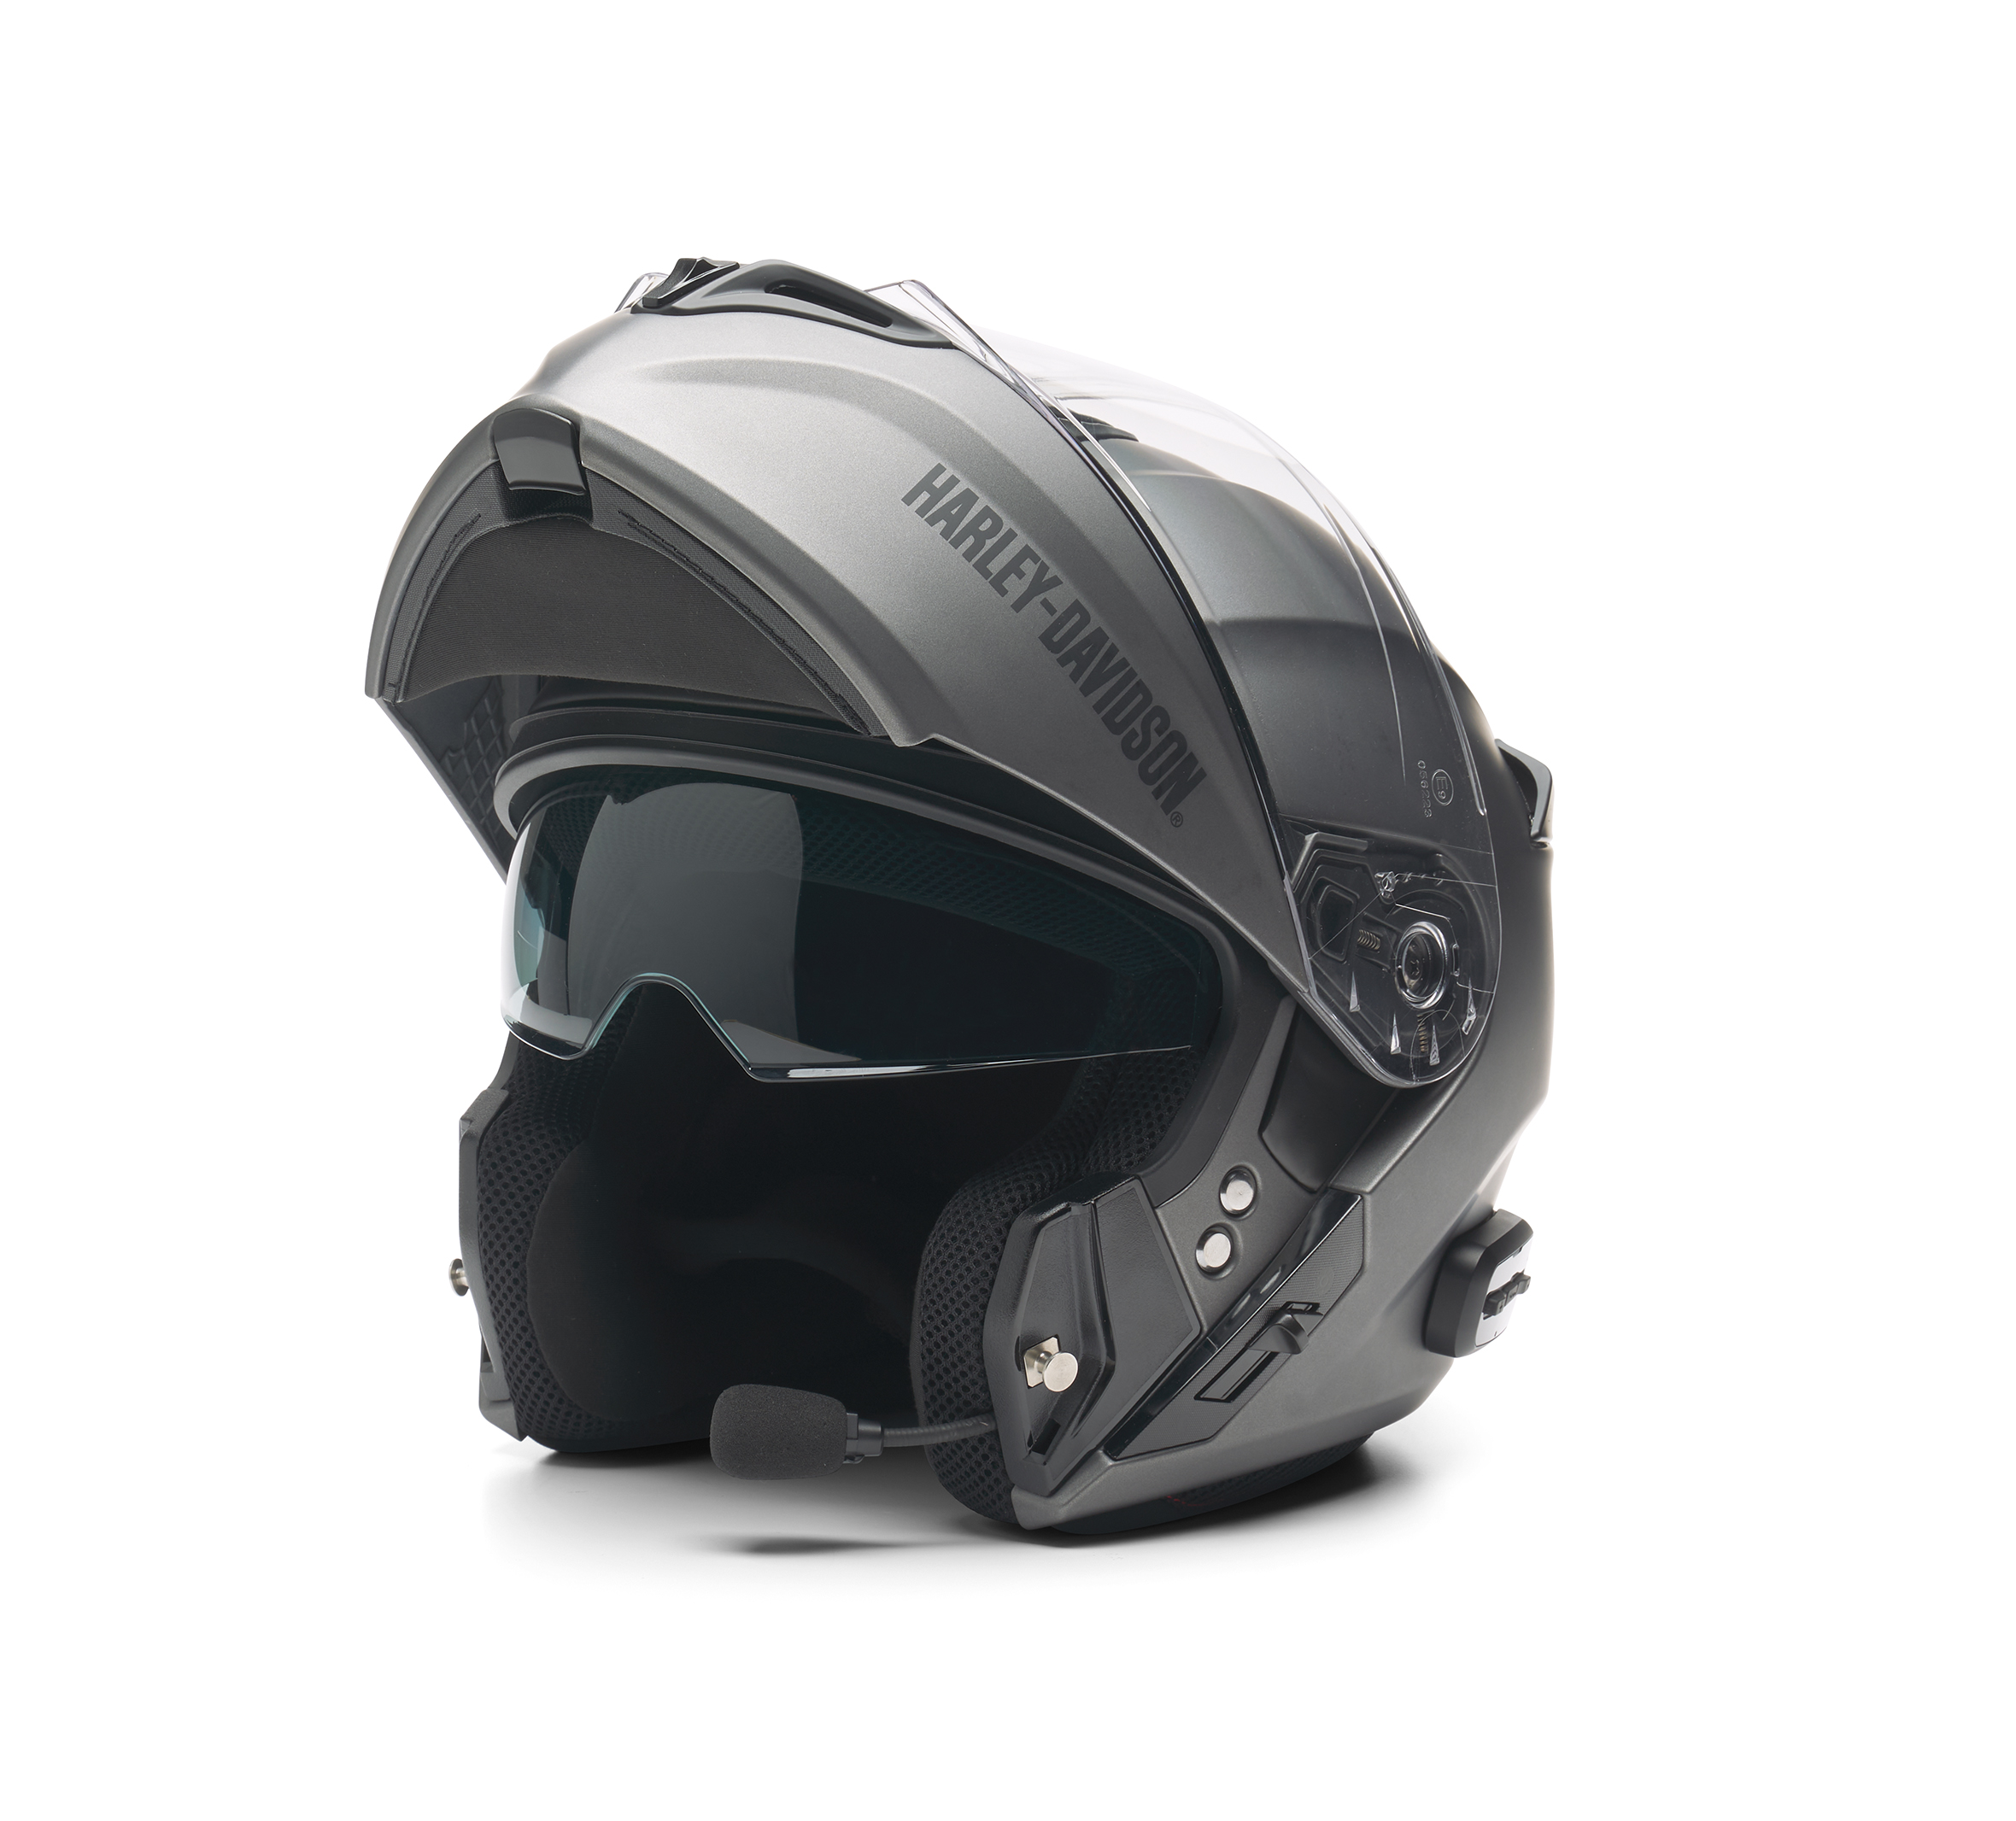 Outrush R Modular Bluetooth Helmet 98101 22vx Harley Davidson Usa